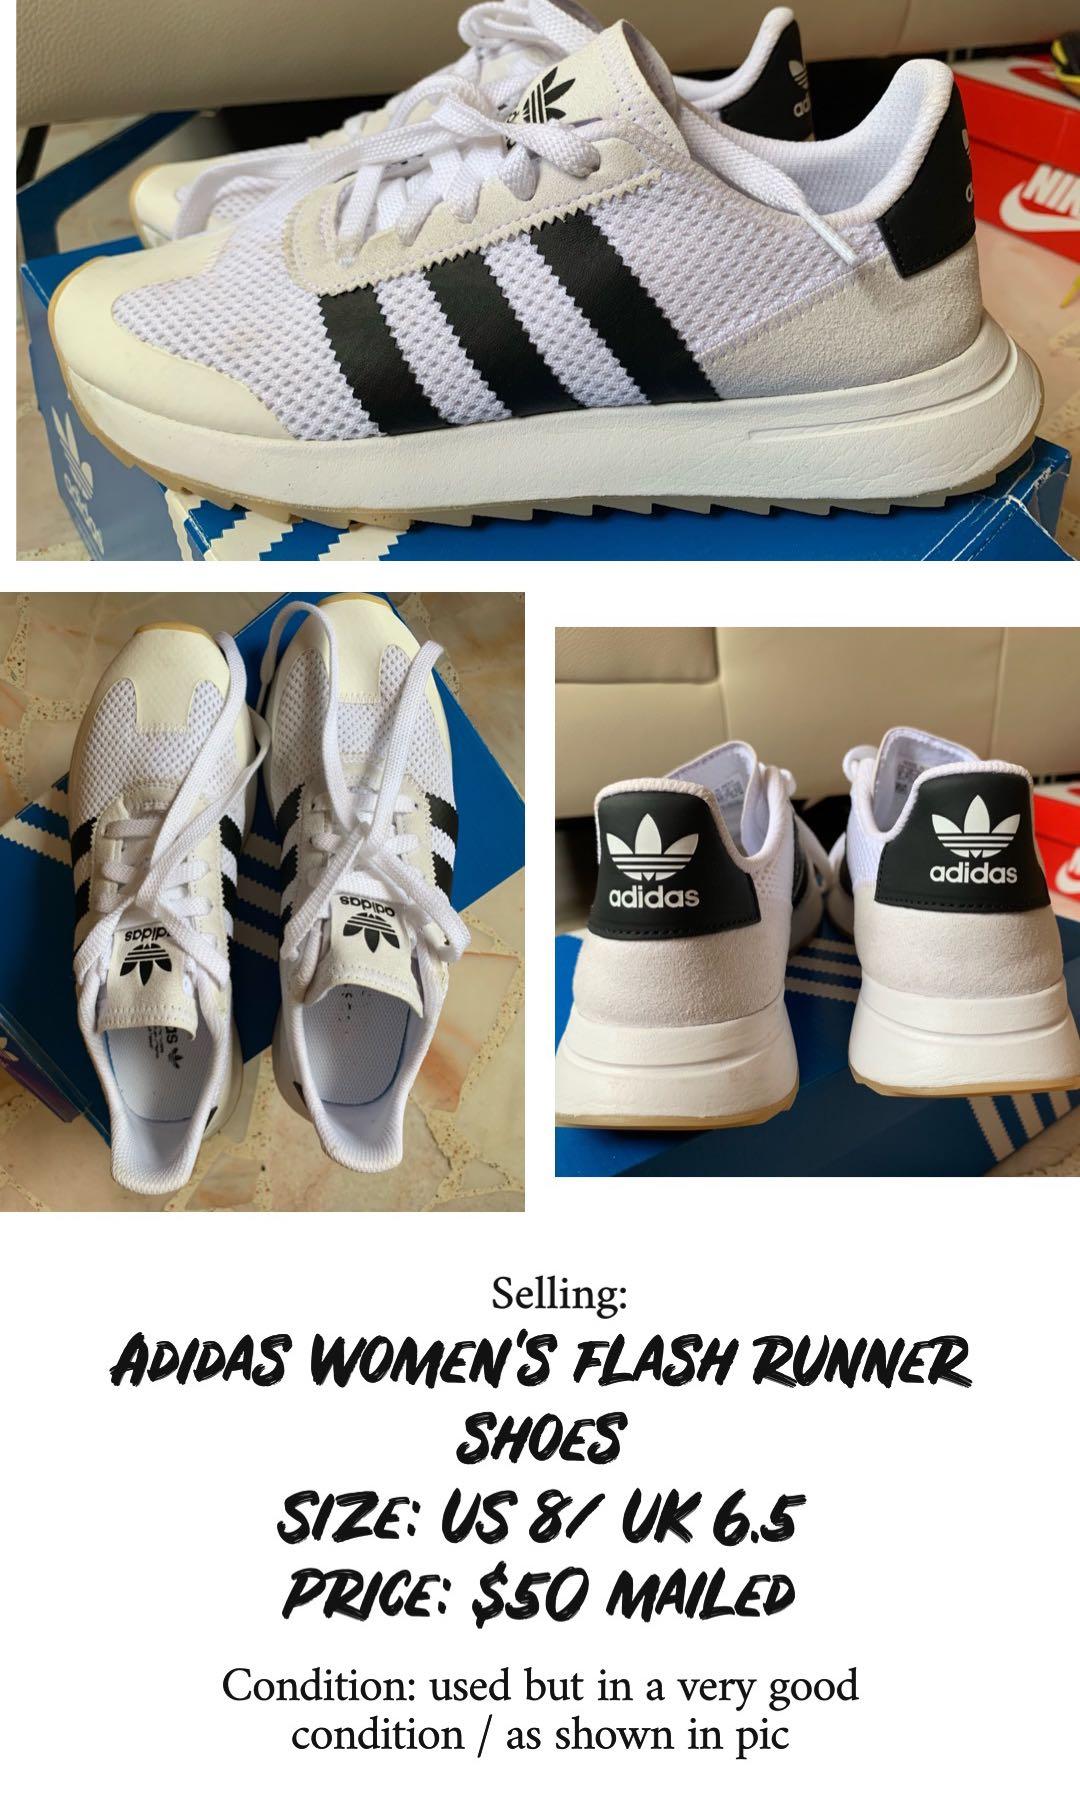 adidas flashrunner shoes women's